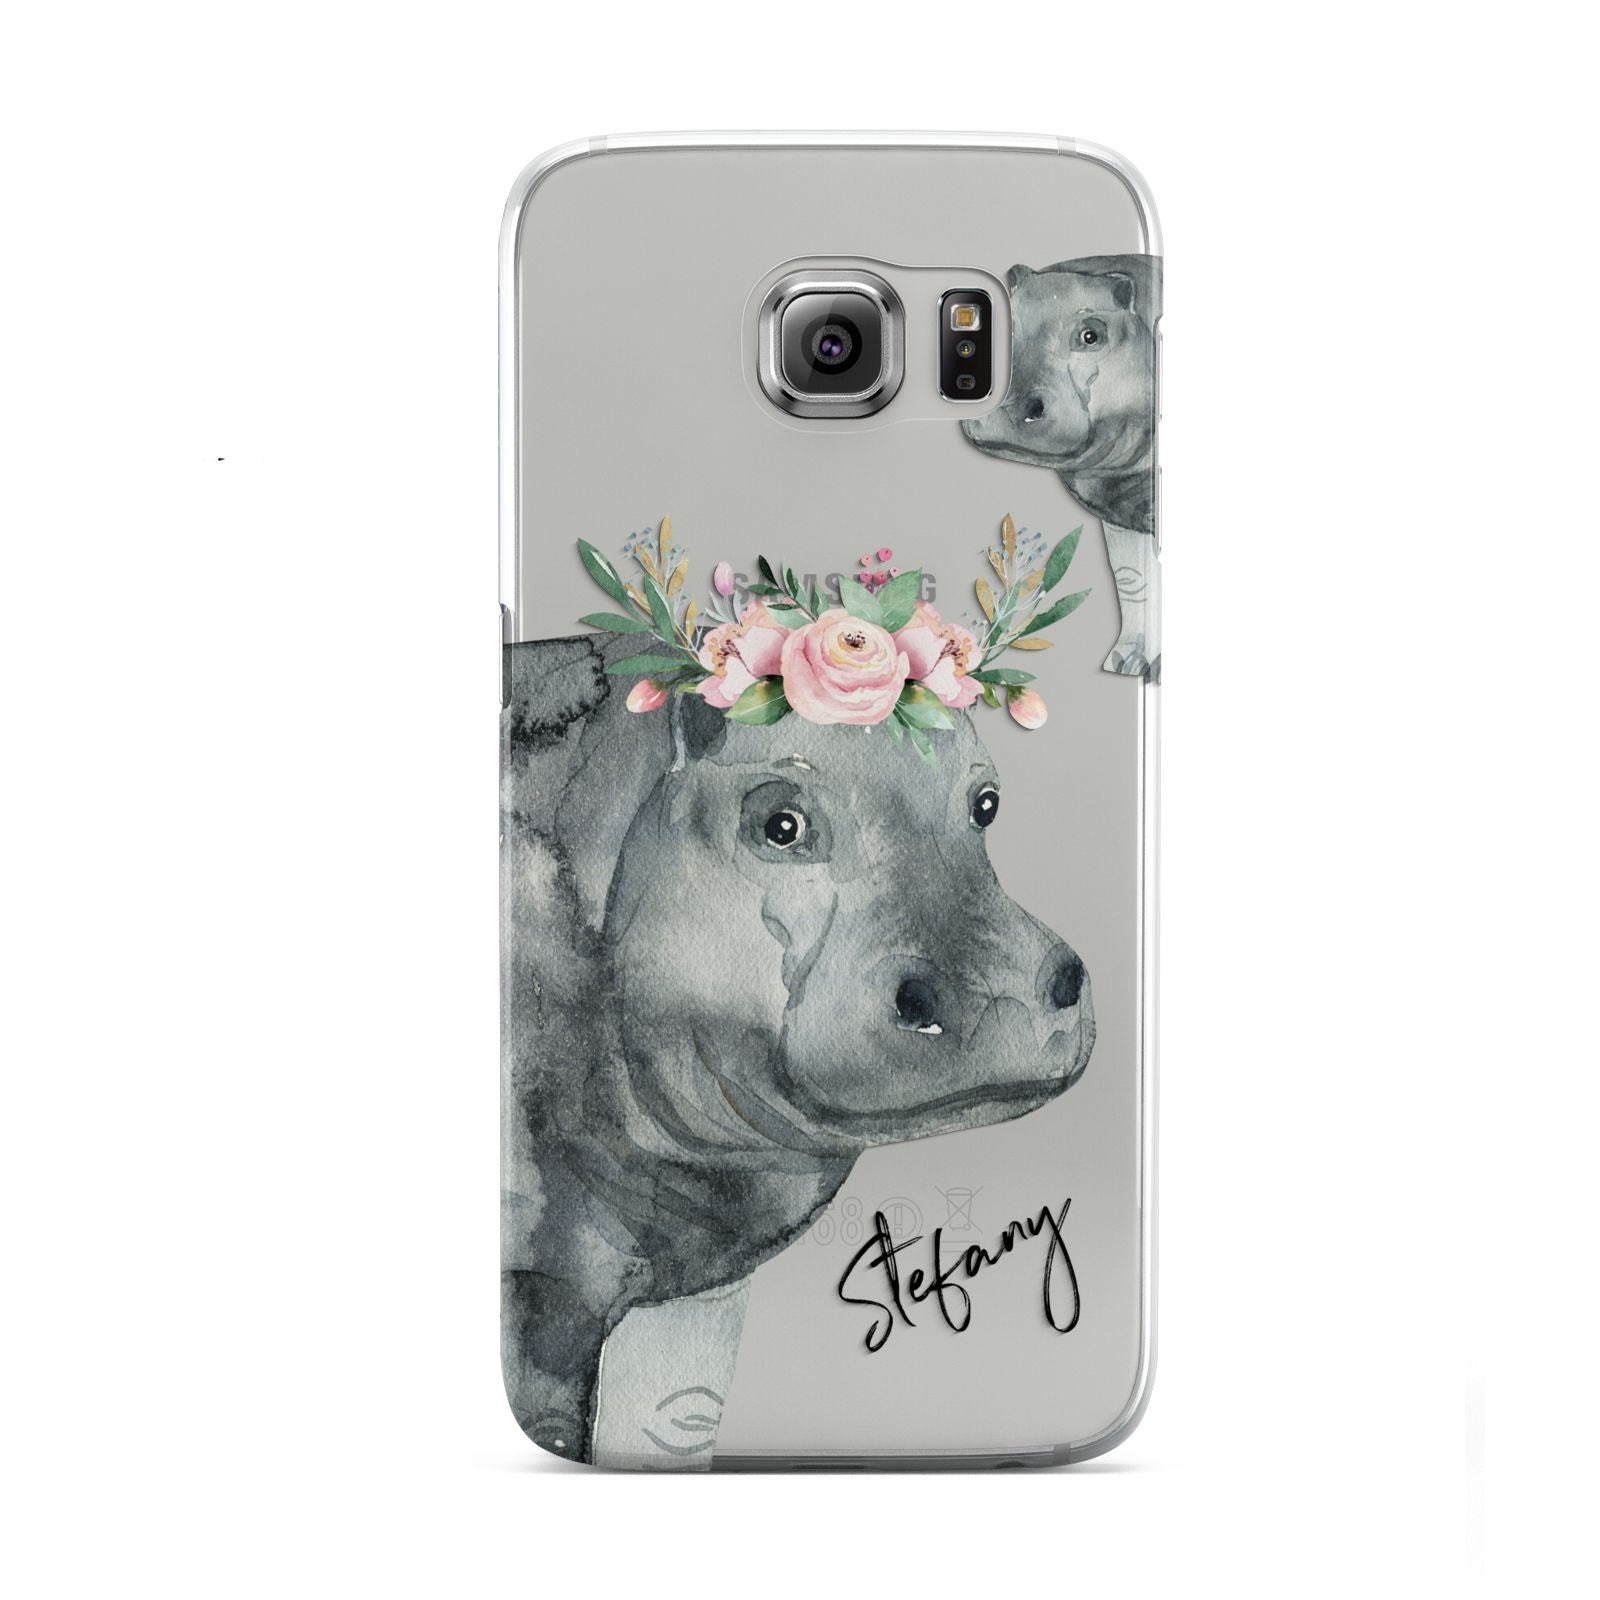 Personalised Hippopotamus Samsung Galaxy S6 Case